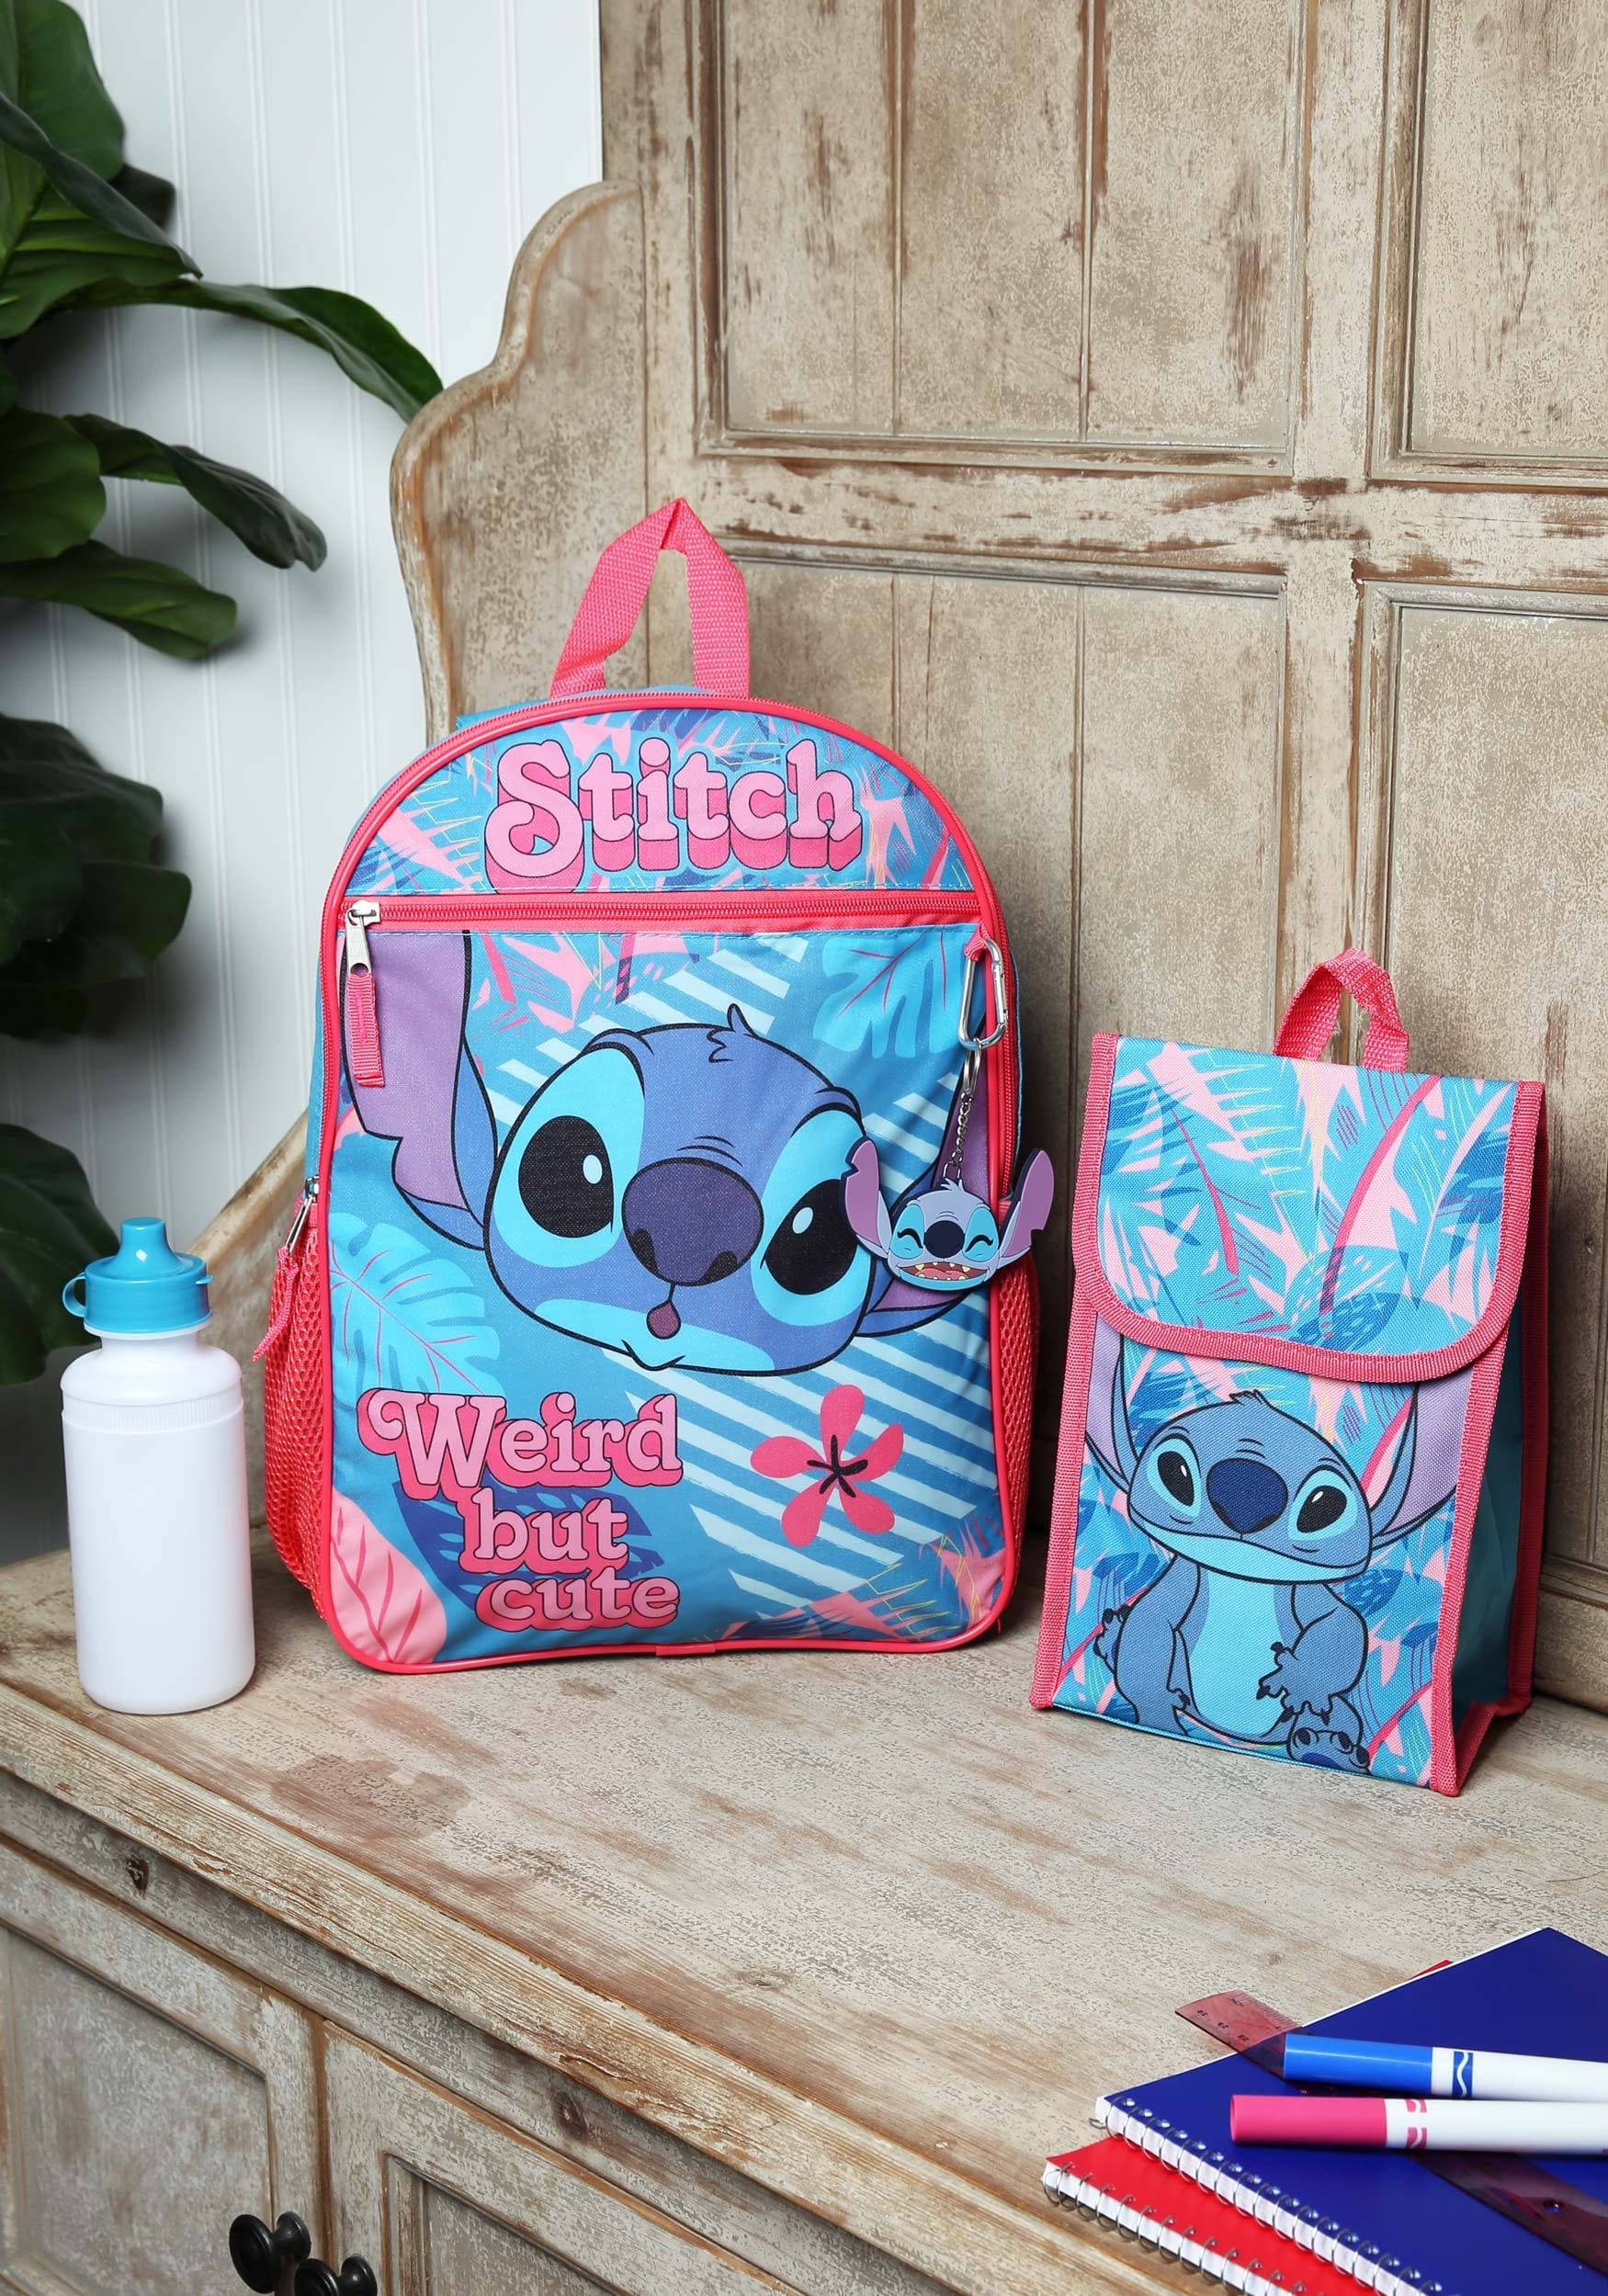 Lilo & Stitch Stitch Backpack School Bag Three-piece Set